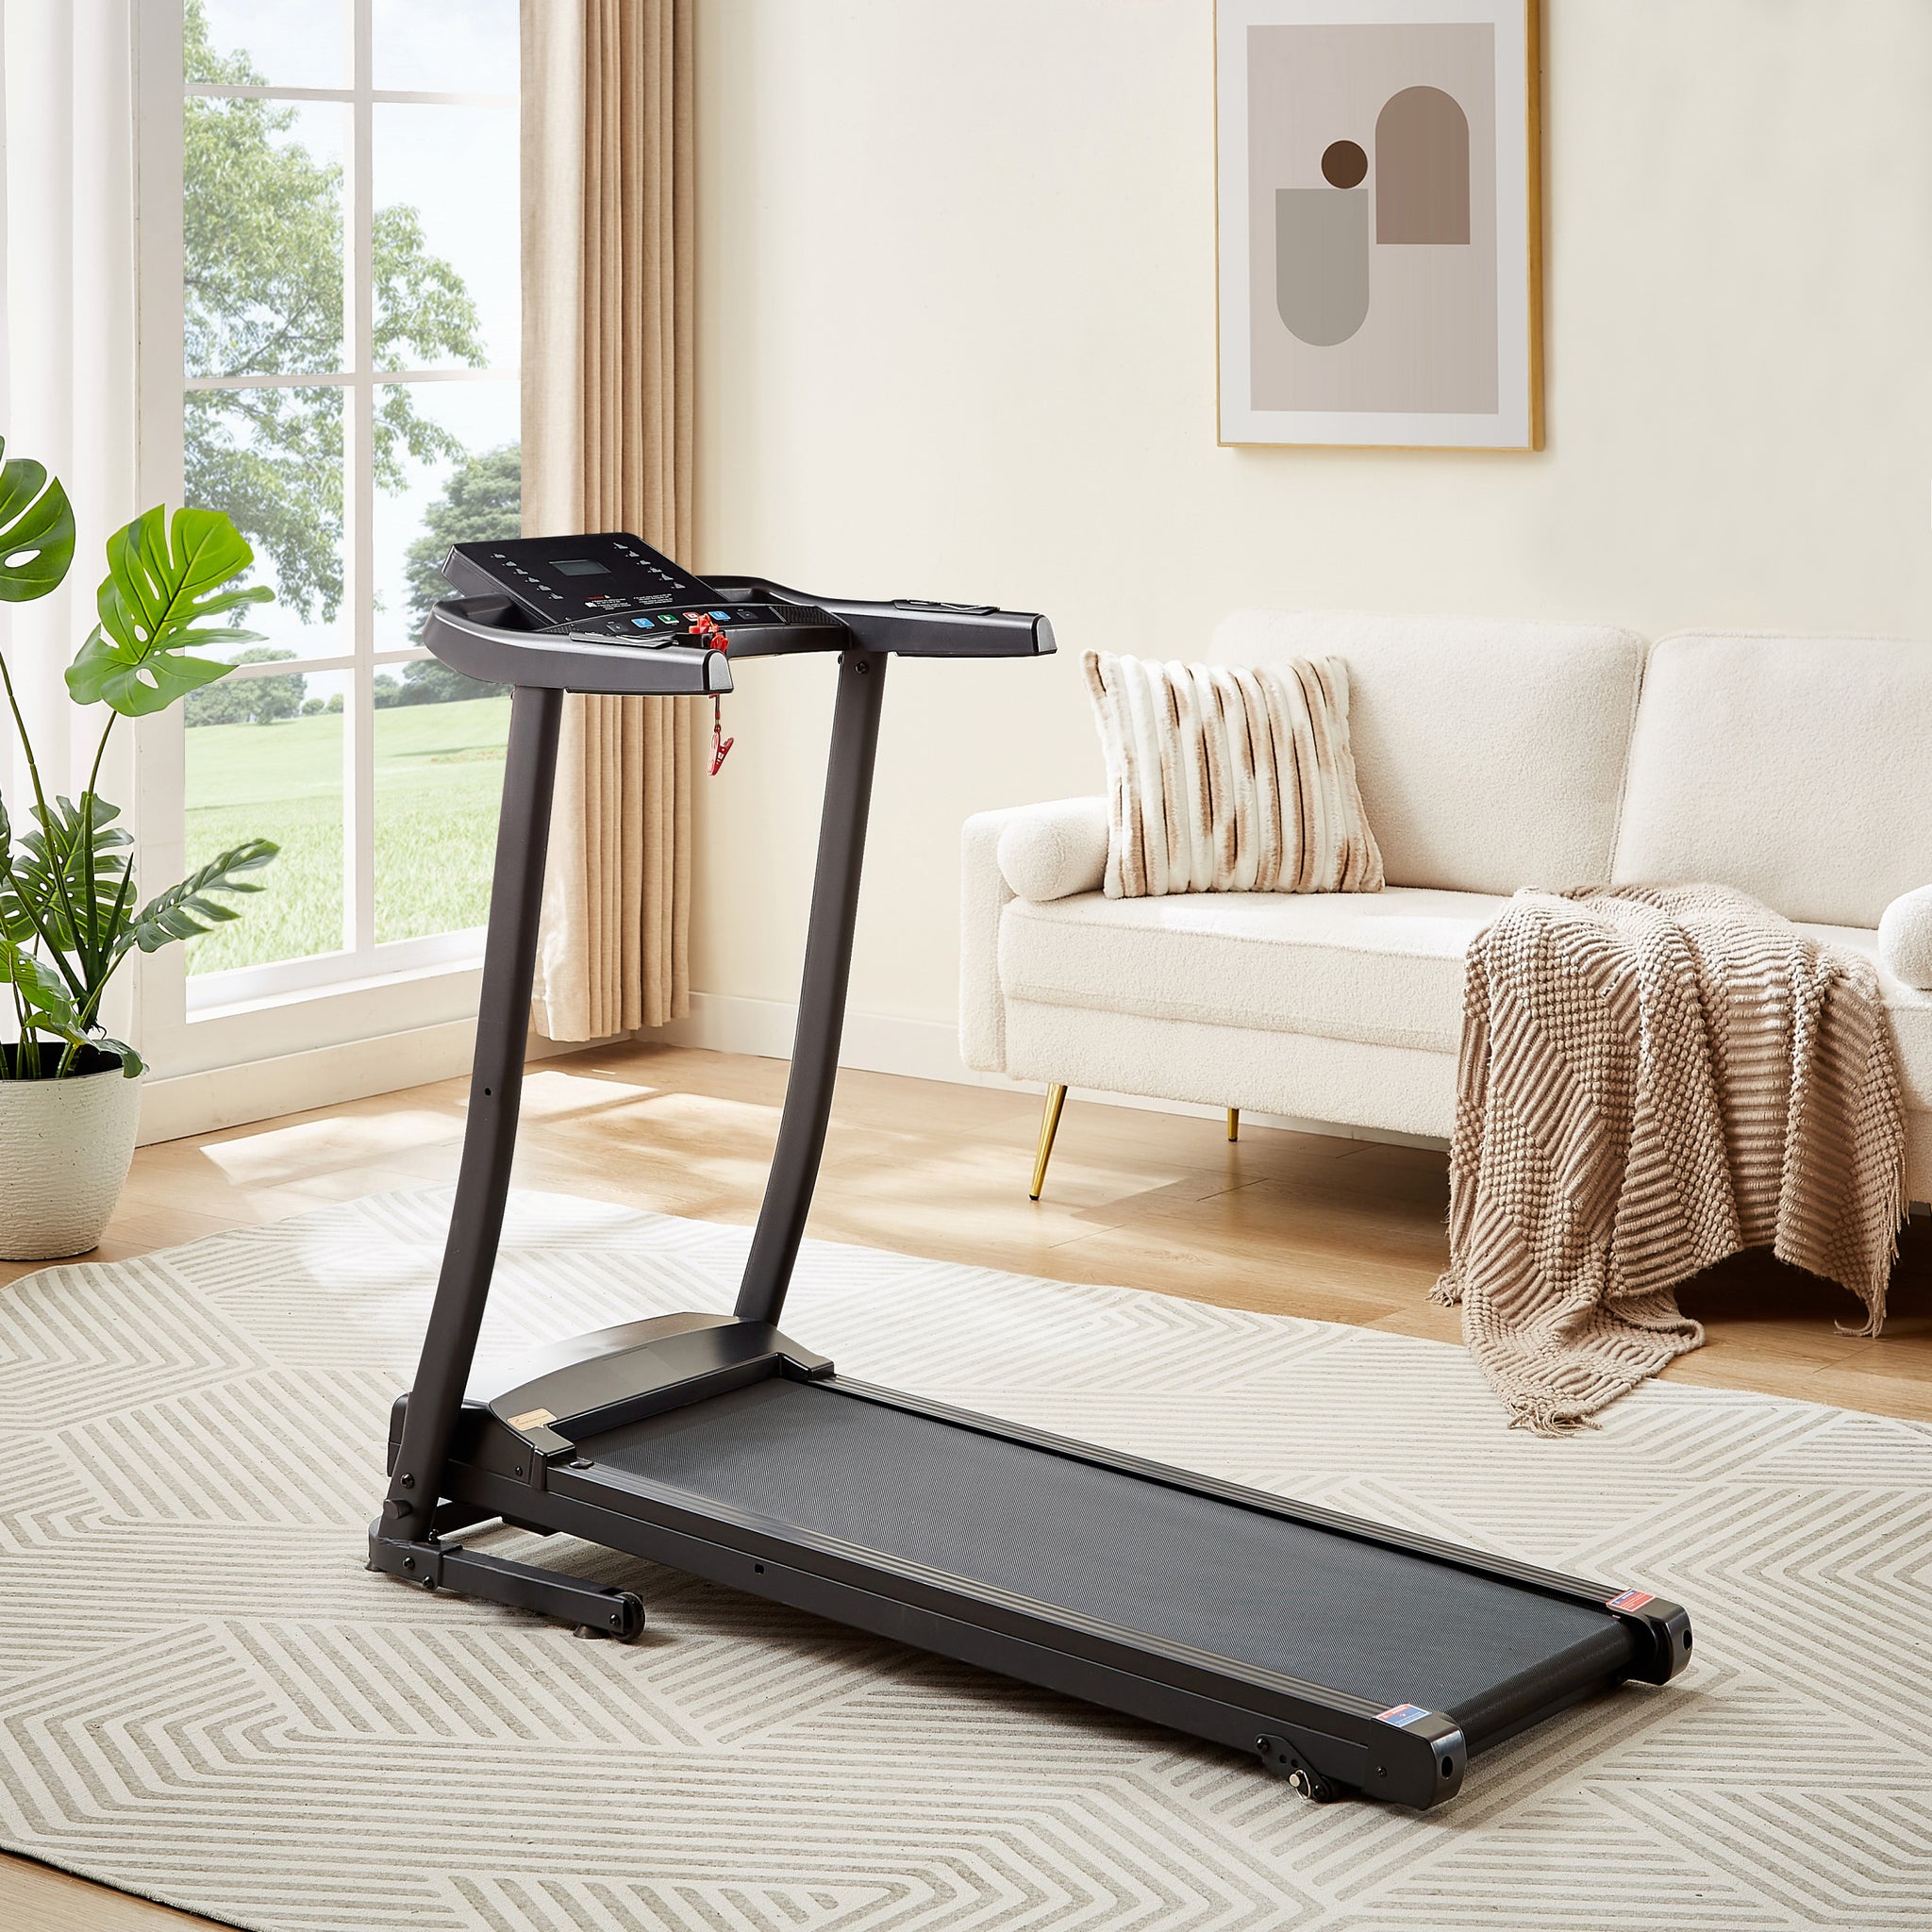 Treadmill 2.5 HP folding treadmill, easy to move, with black-steel